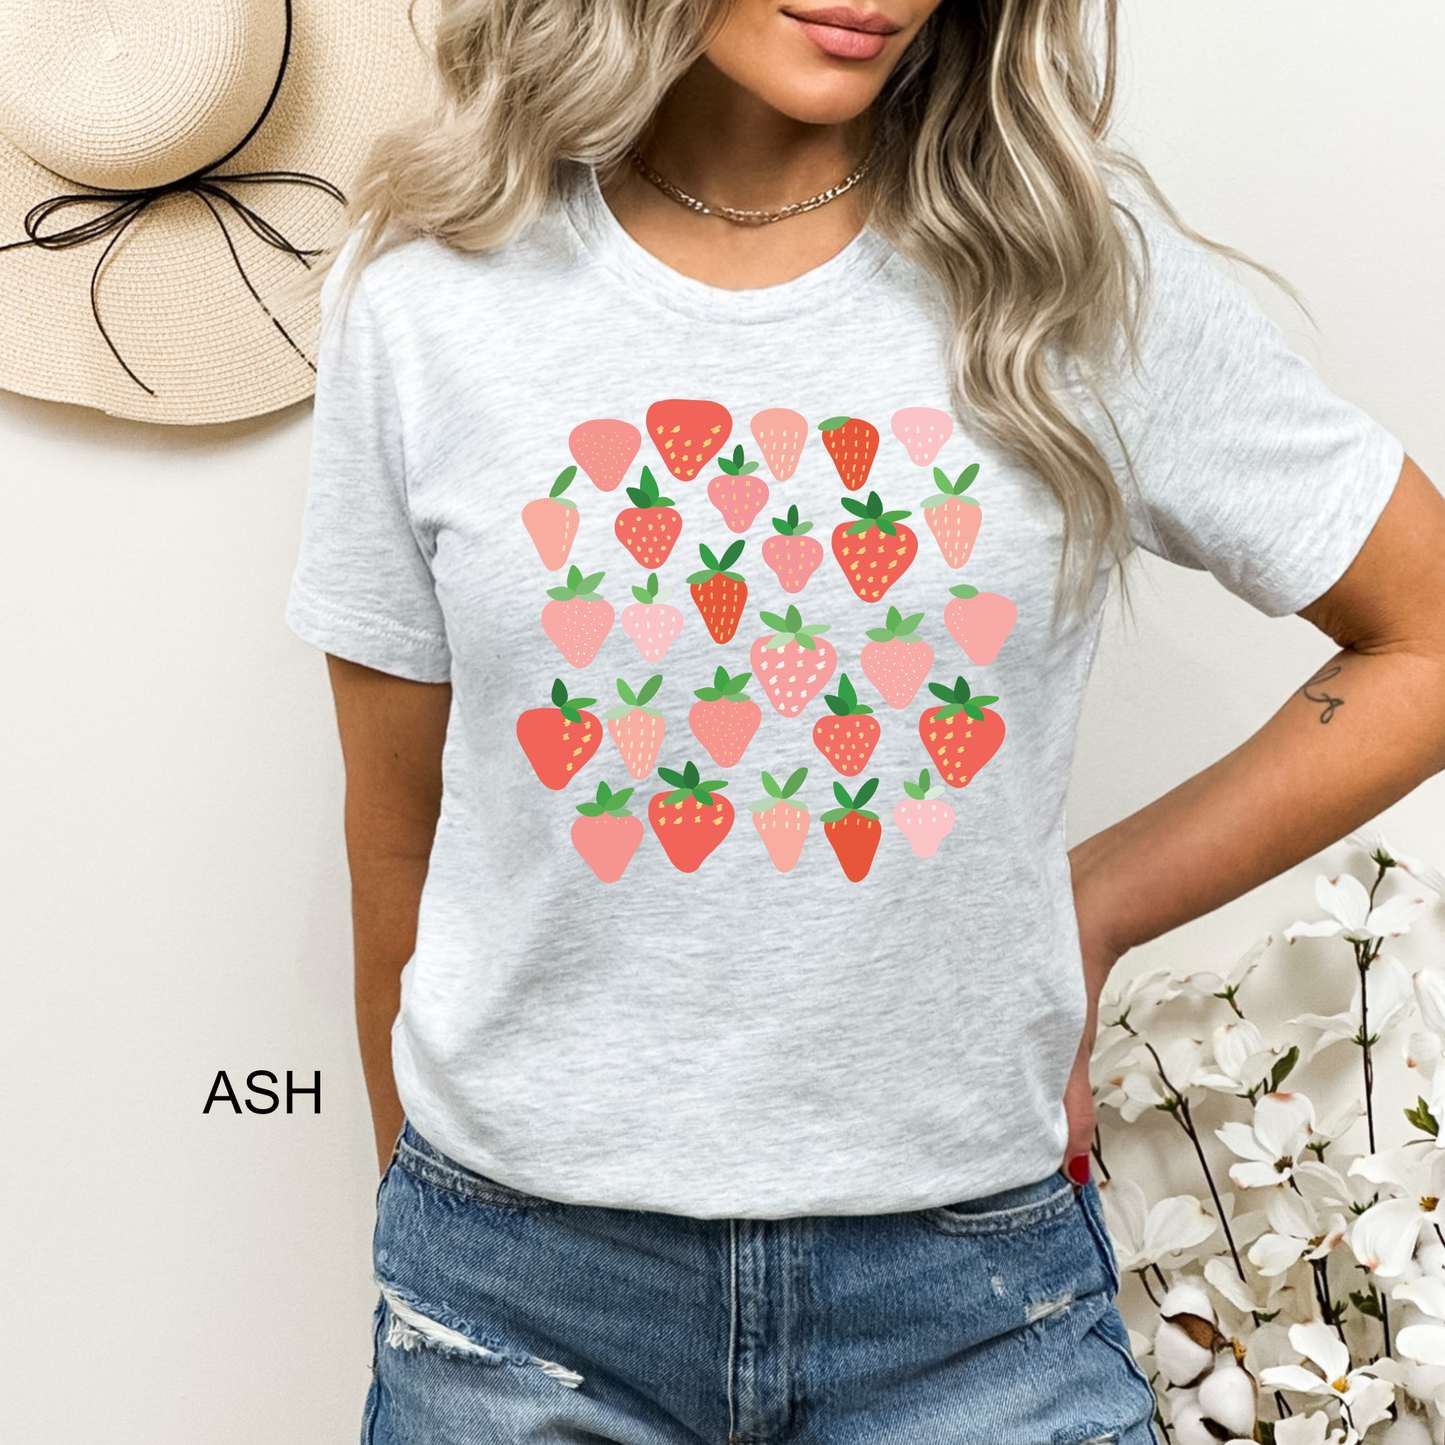 Loads of Strawberries - Strawberry Festival T-shirt